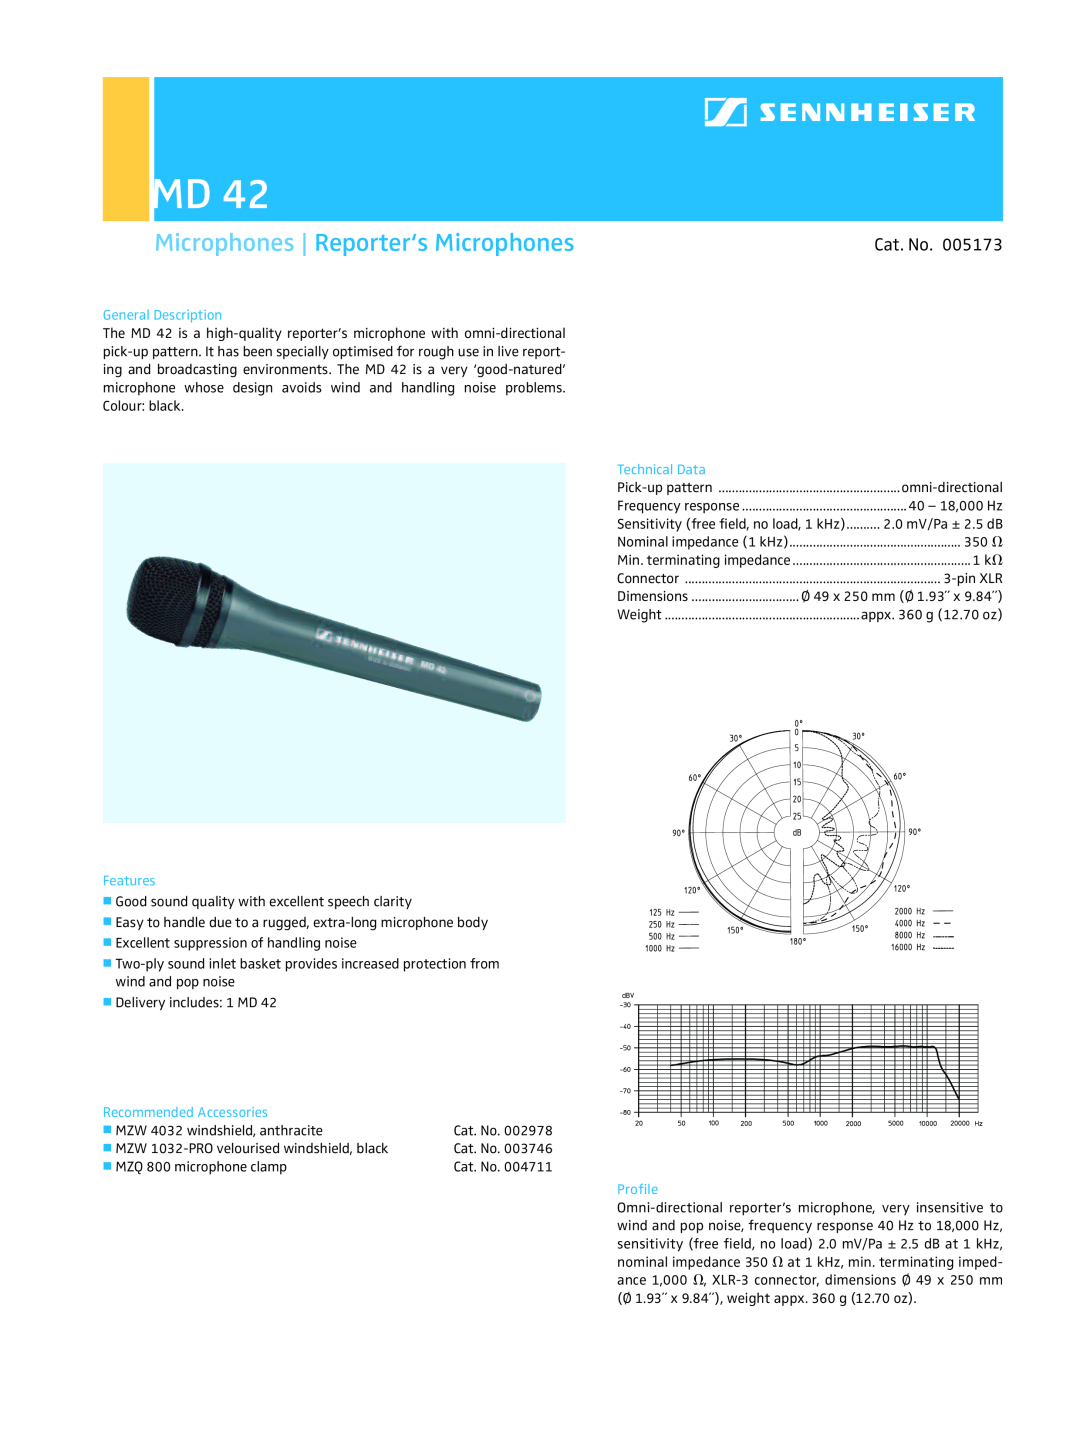 Sennheiser MD 42 dimensions Microphones Reporter‘s Microphones, Cat. No, General Description, Features, Technical Data 